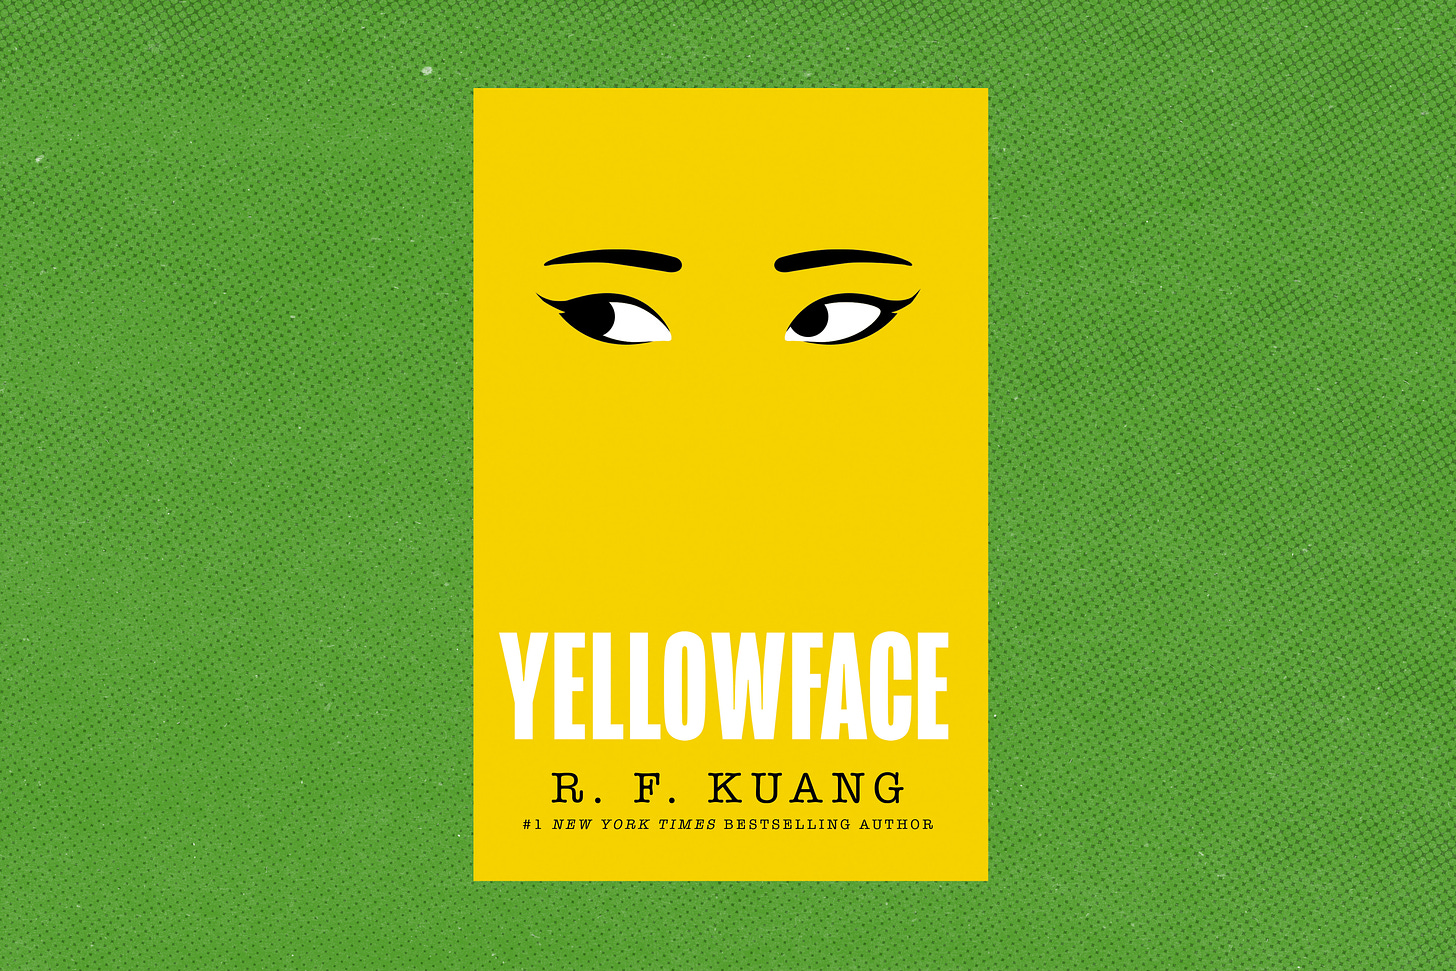 Book review: 'Yellowface' by R.F. Kuang - The Washington Post